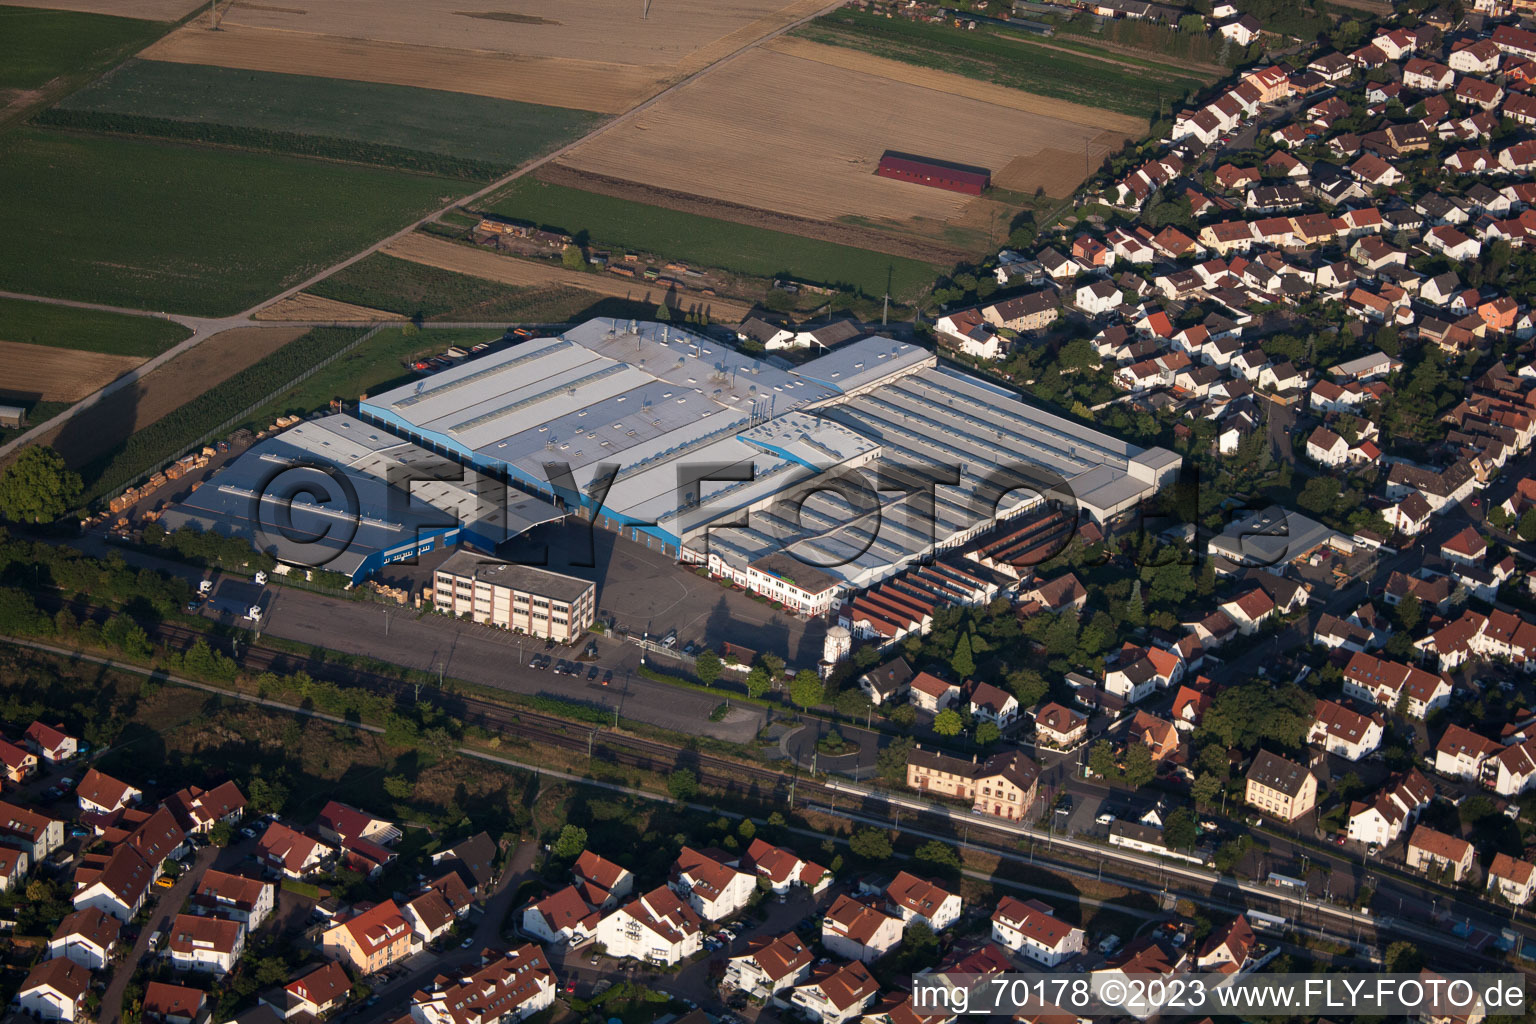 Building and production halls on the premises of Kardex Remstar Produktion Deutschland GmbH Kardex-Platz in the district Sondernheim in Bellheim in the state Rhineland-Palatinate from above